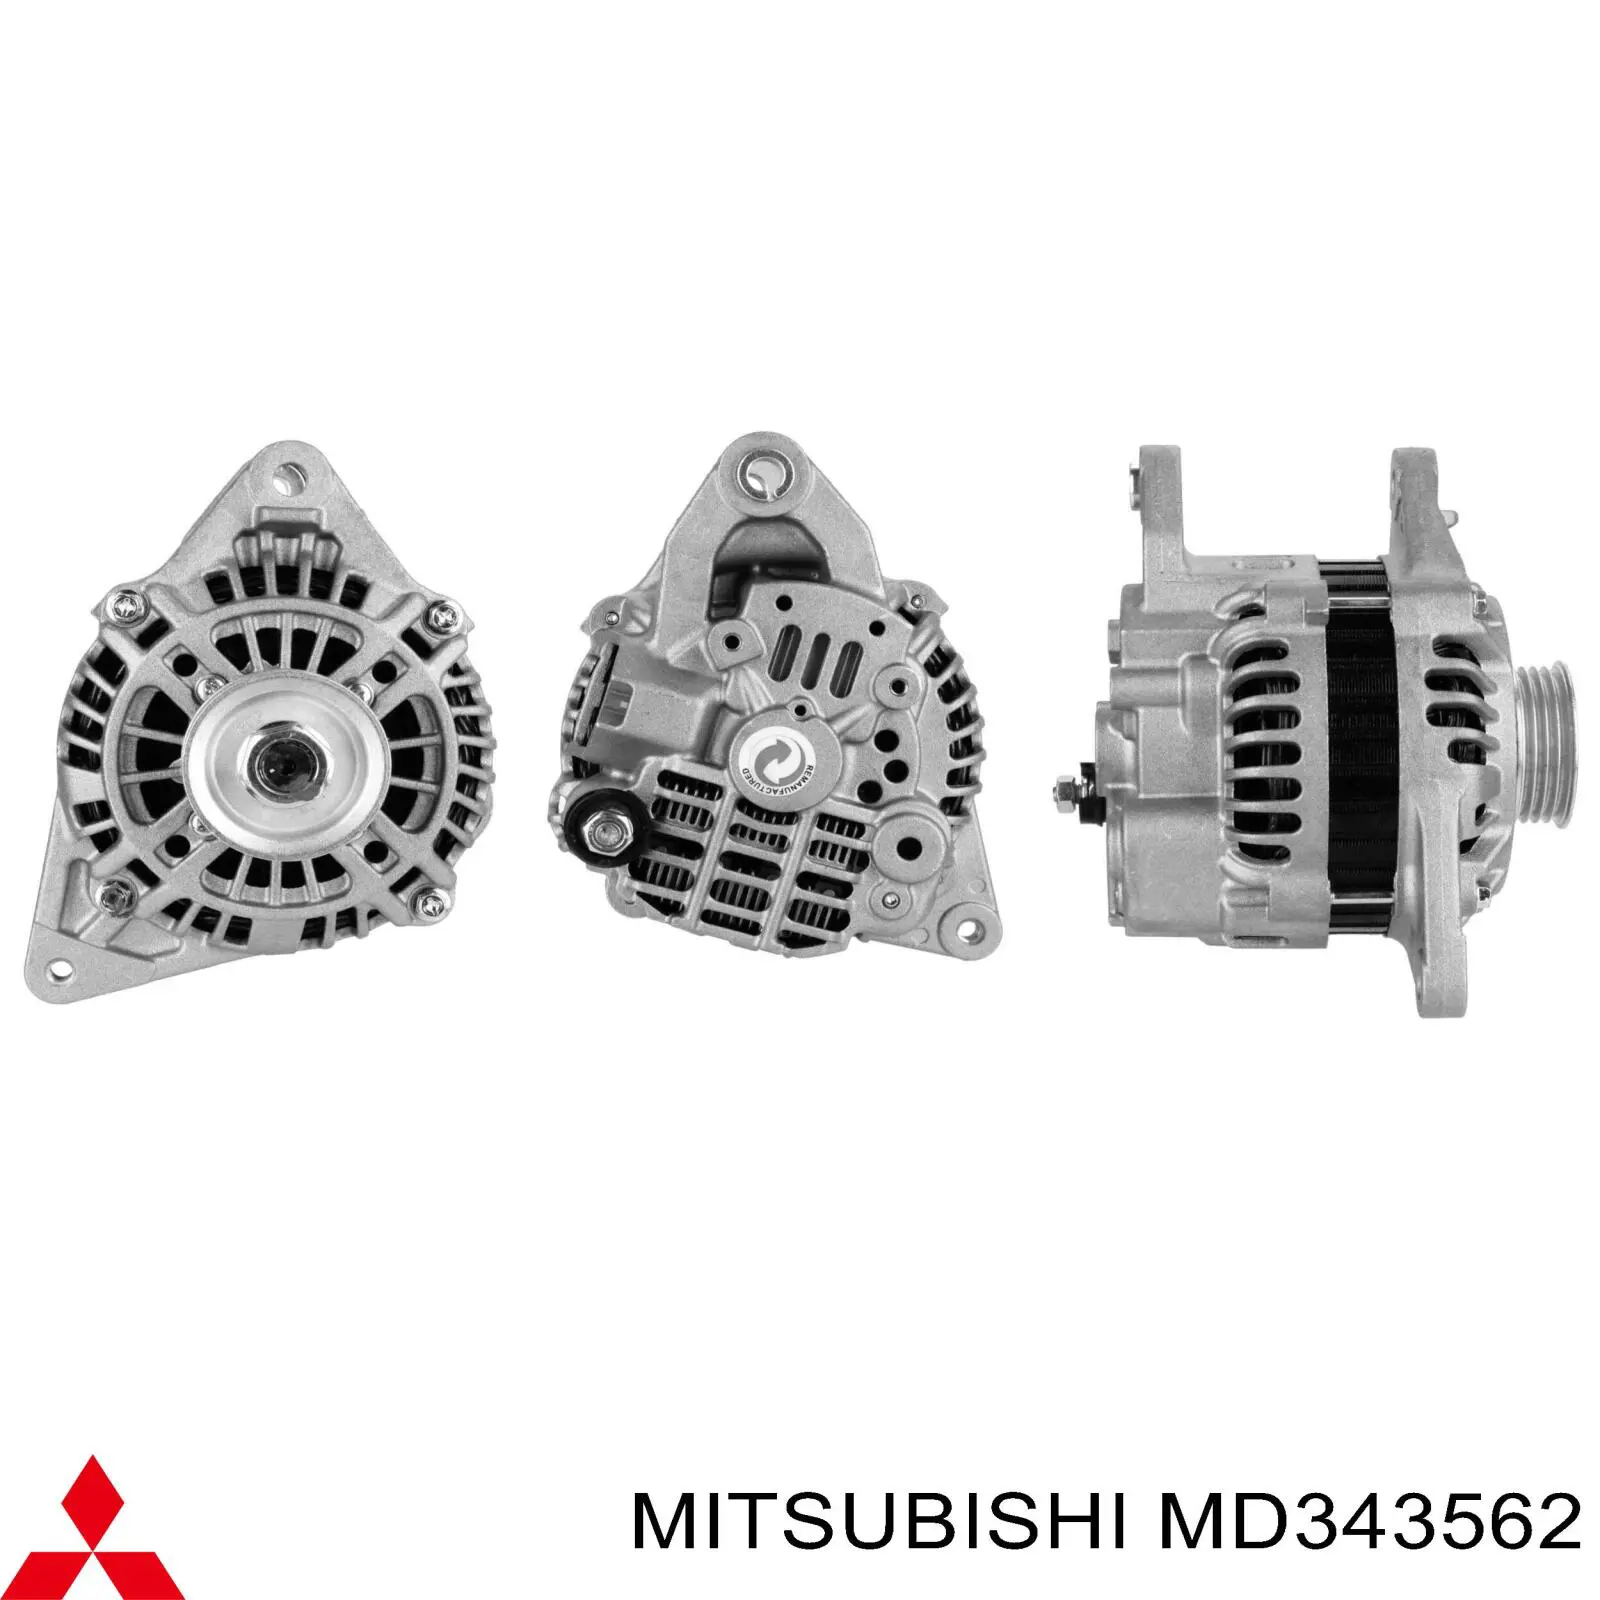 MD343562 Mitsubishi alternador